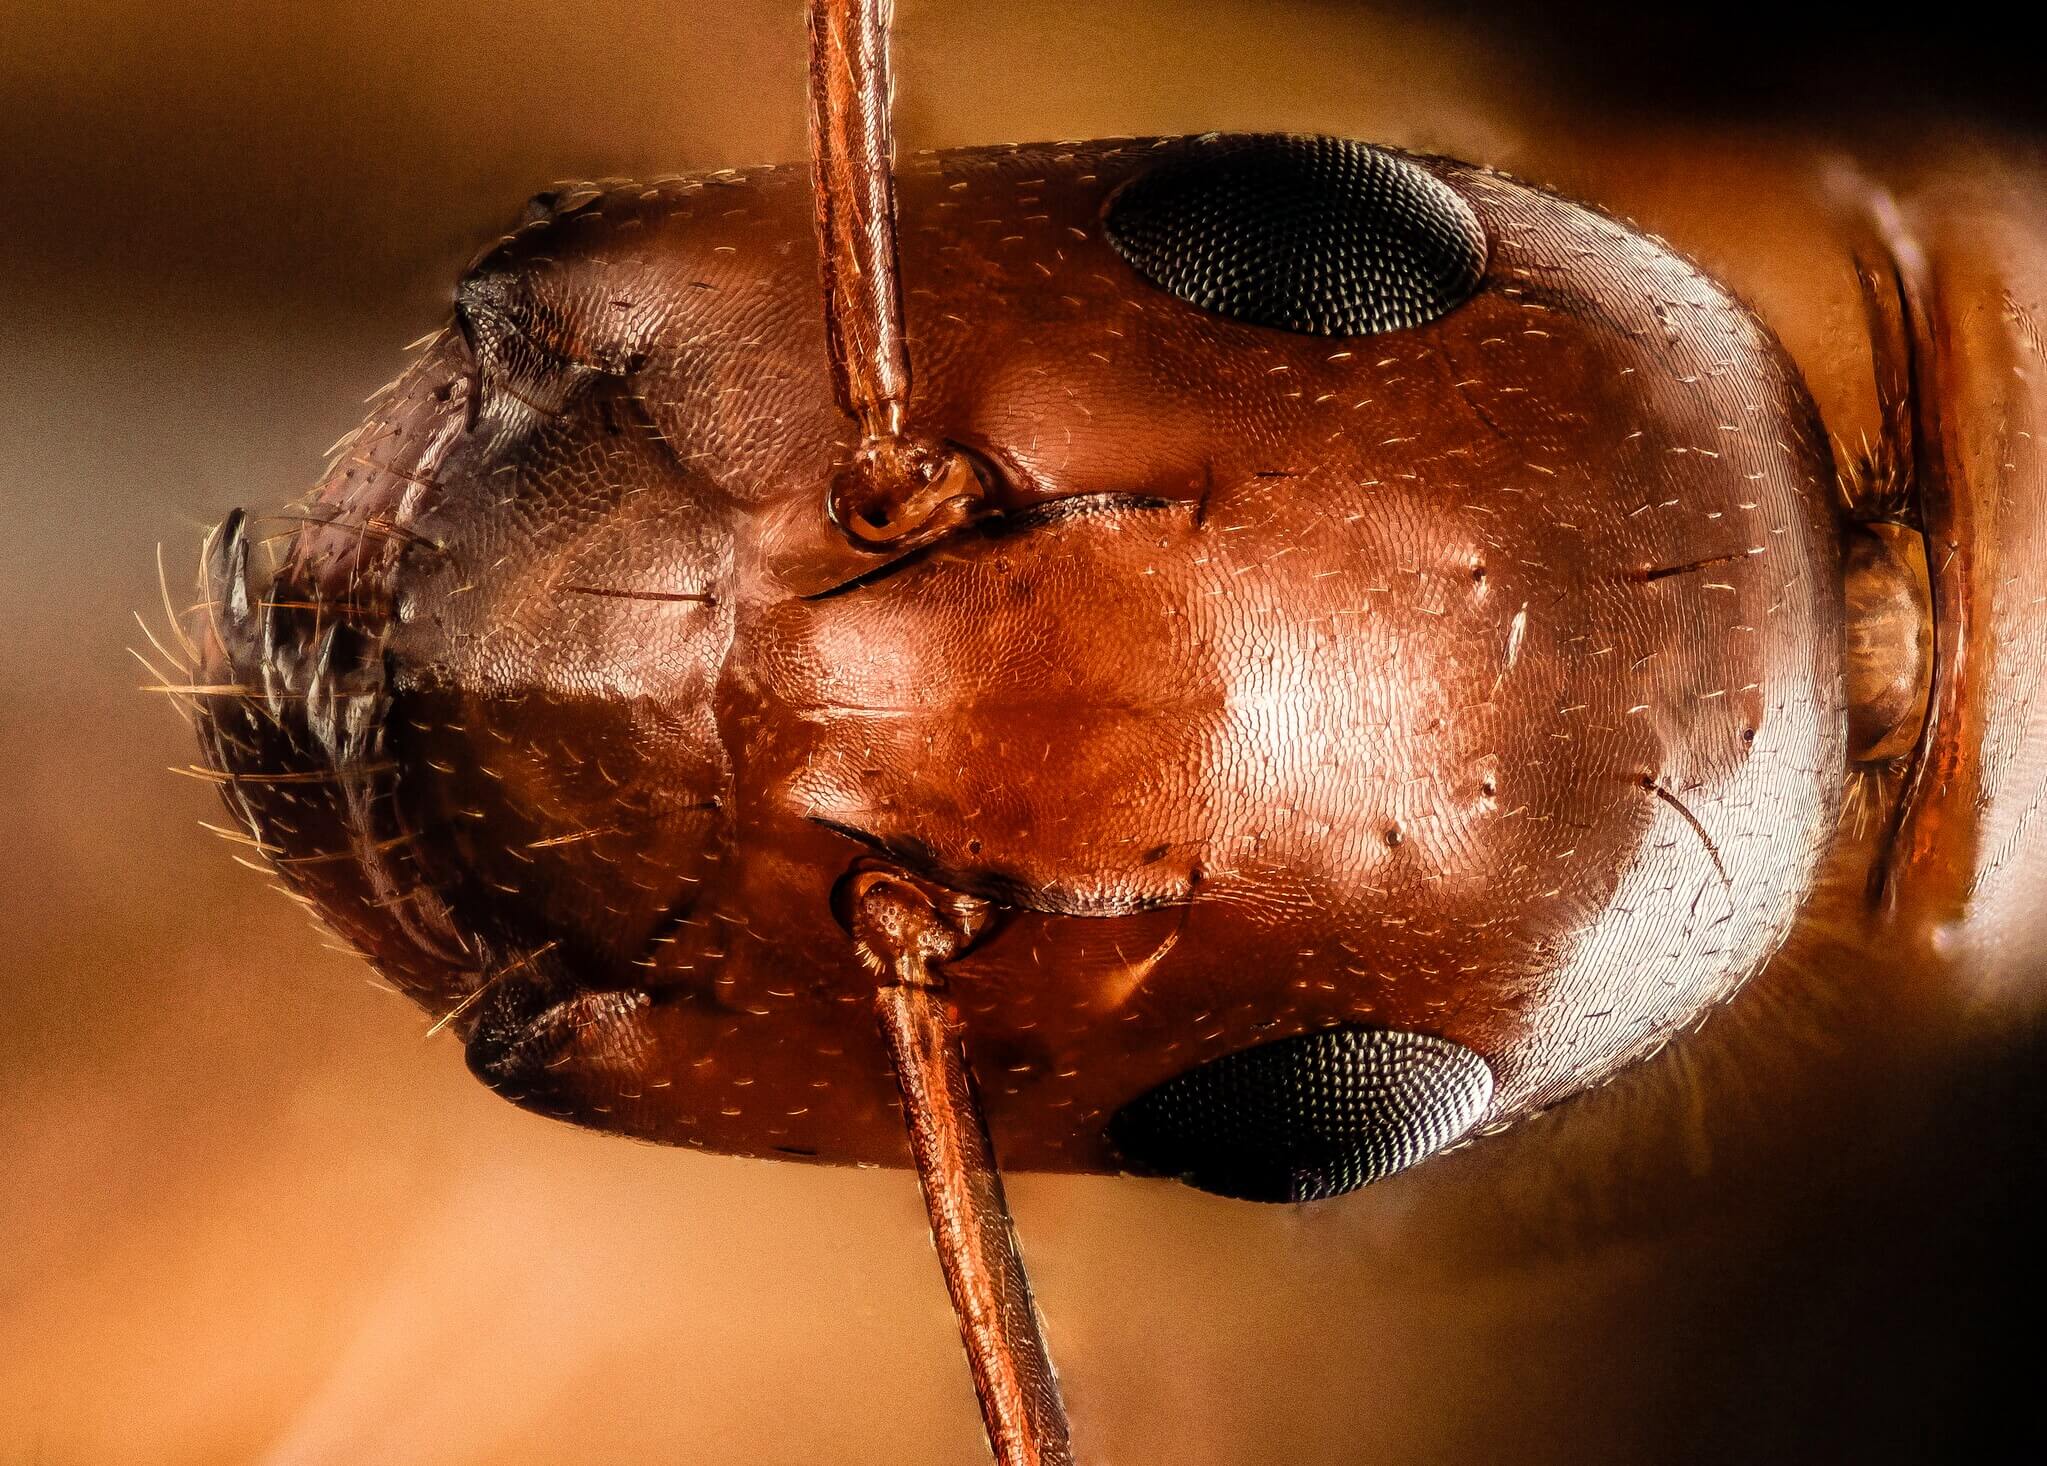 Муравей под микроскопом. Голова муравья под микроскопом. Фото.